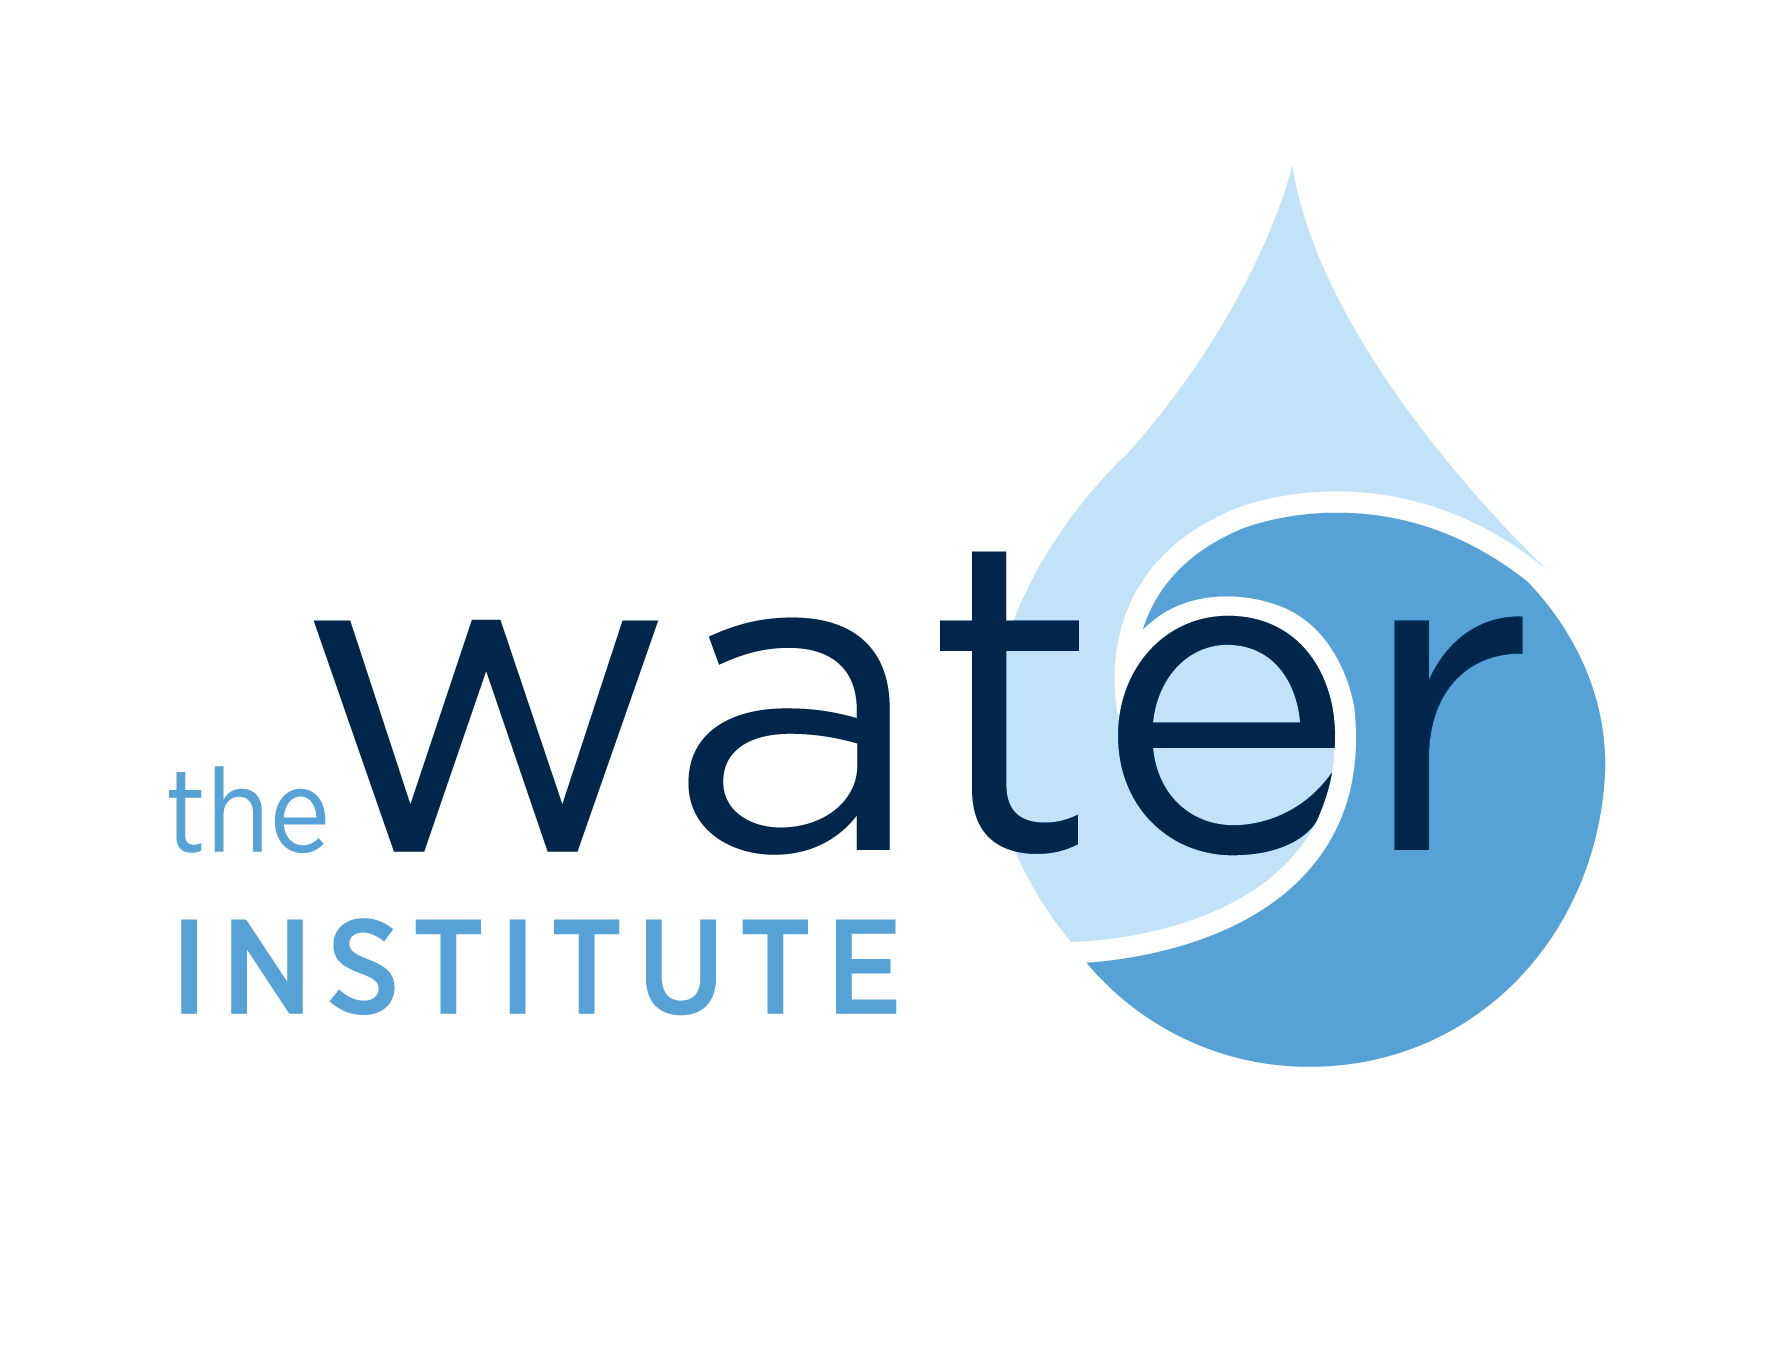 The Water Institute logo